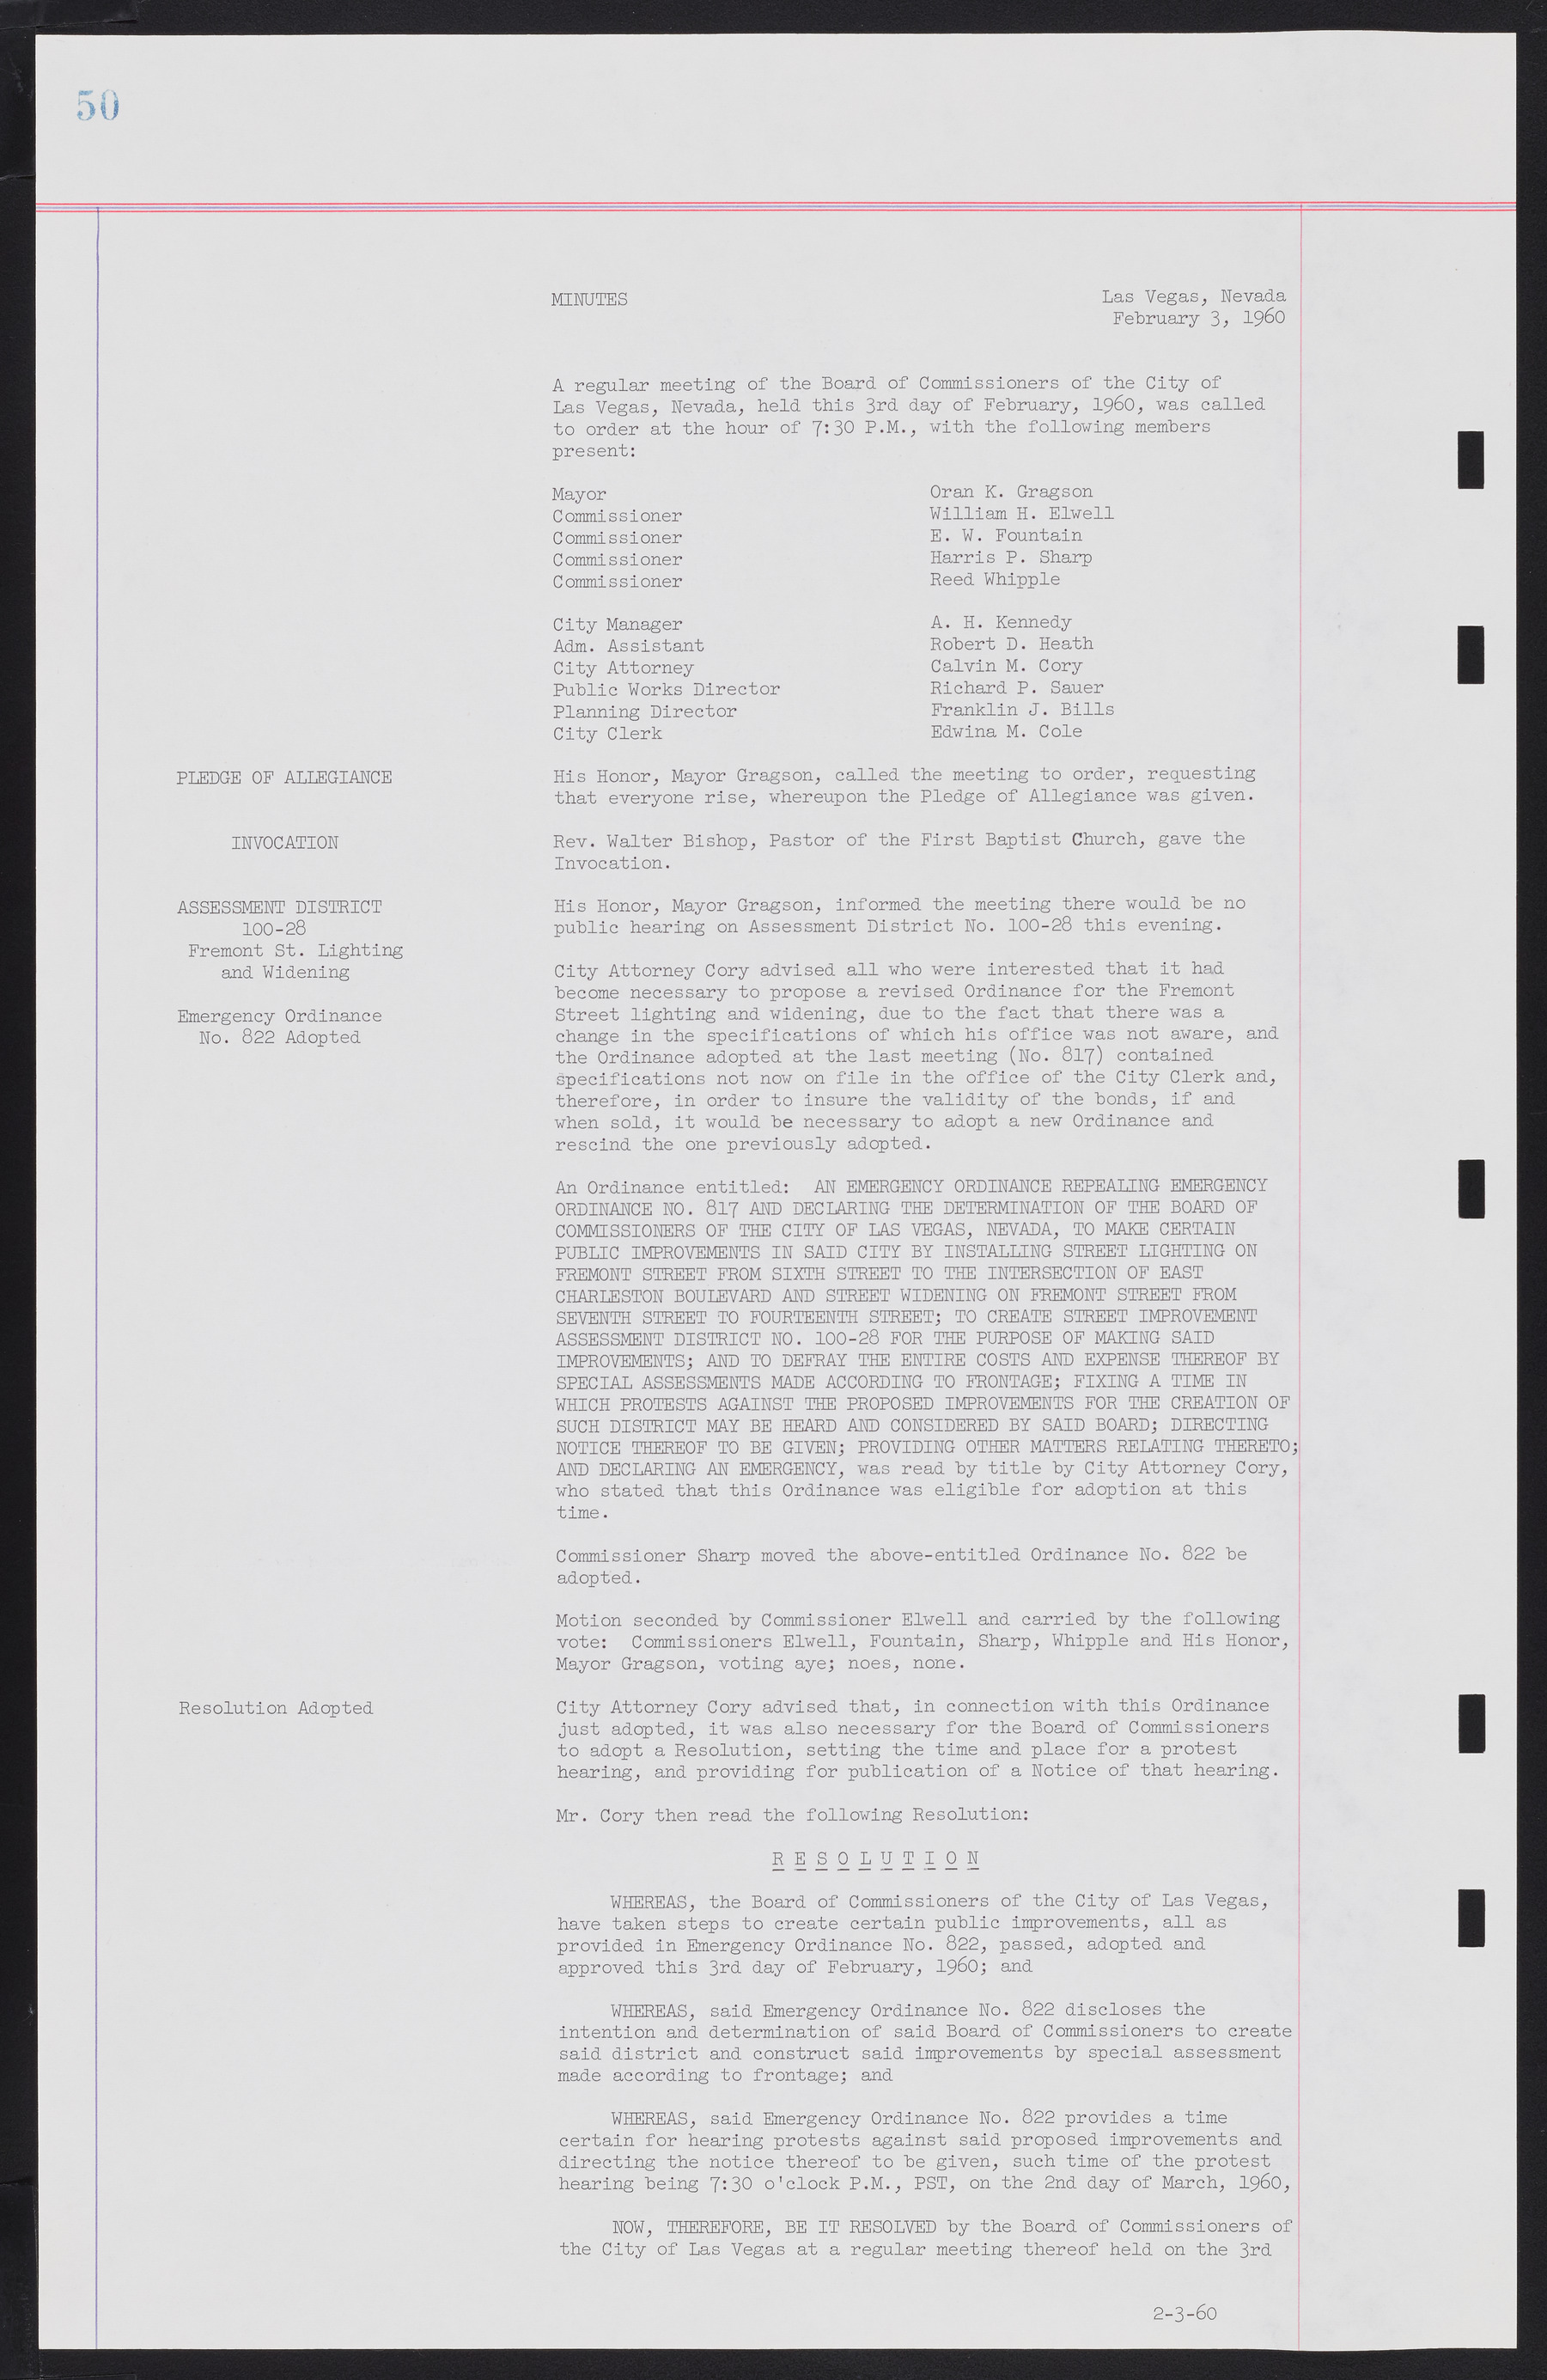 Las Vegas City Commission Minutes, December 8, 1959 to February 17, 1960, lvc000012-54